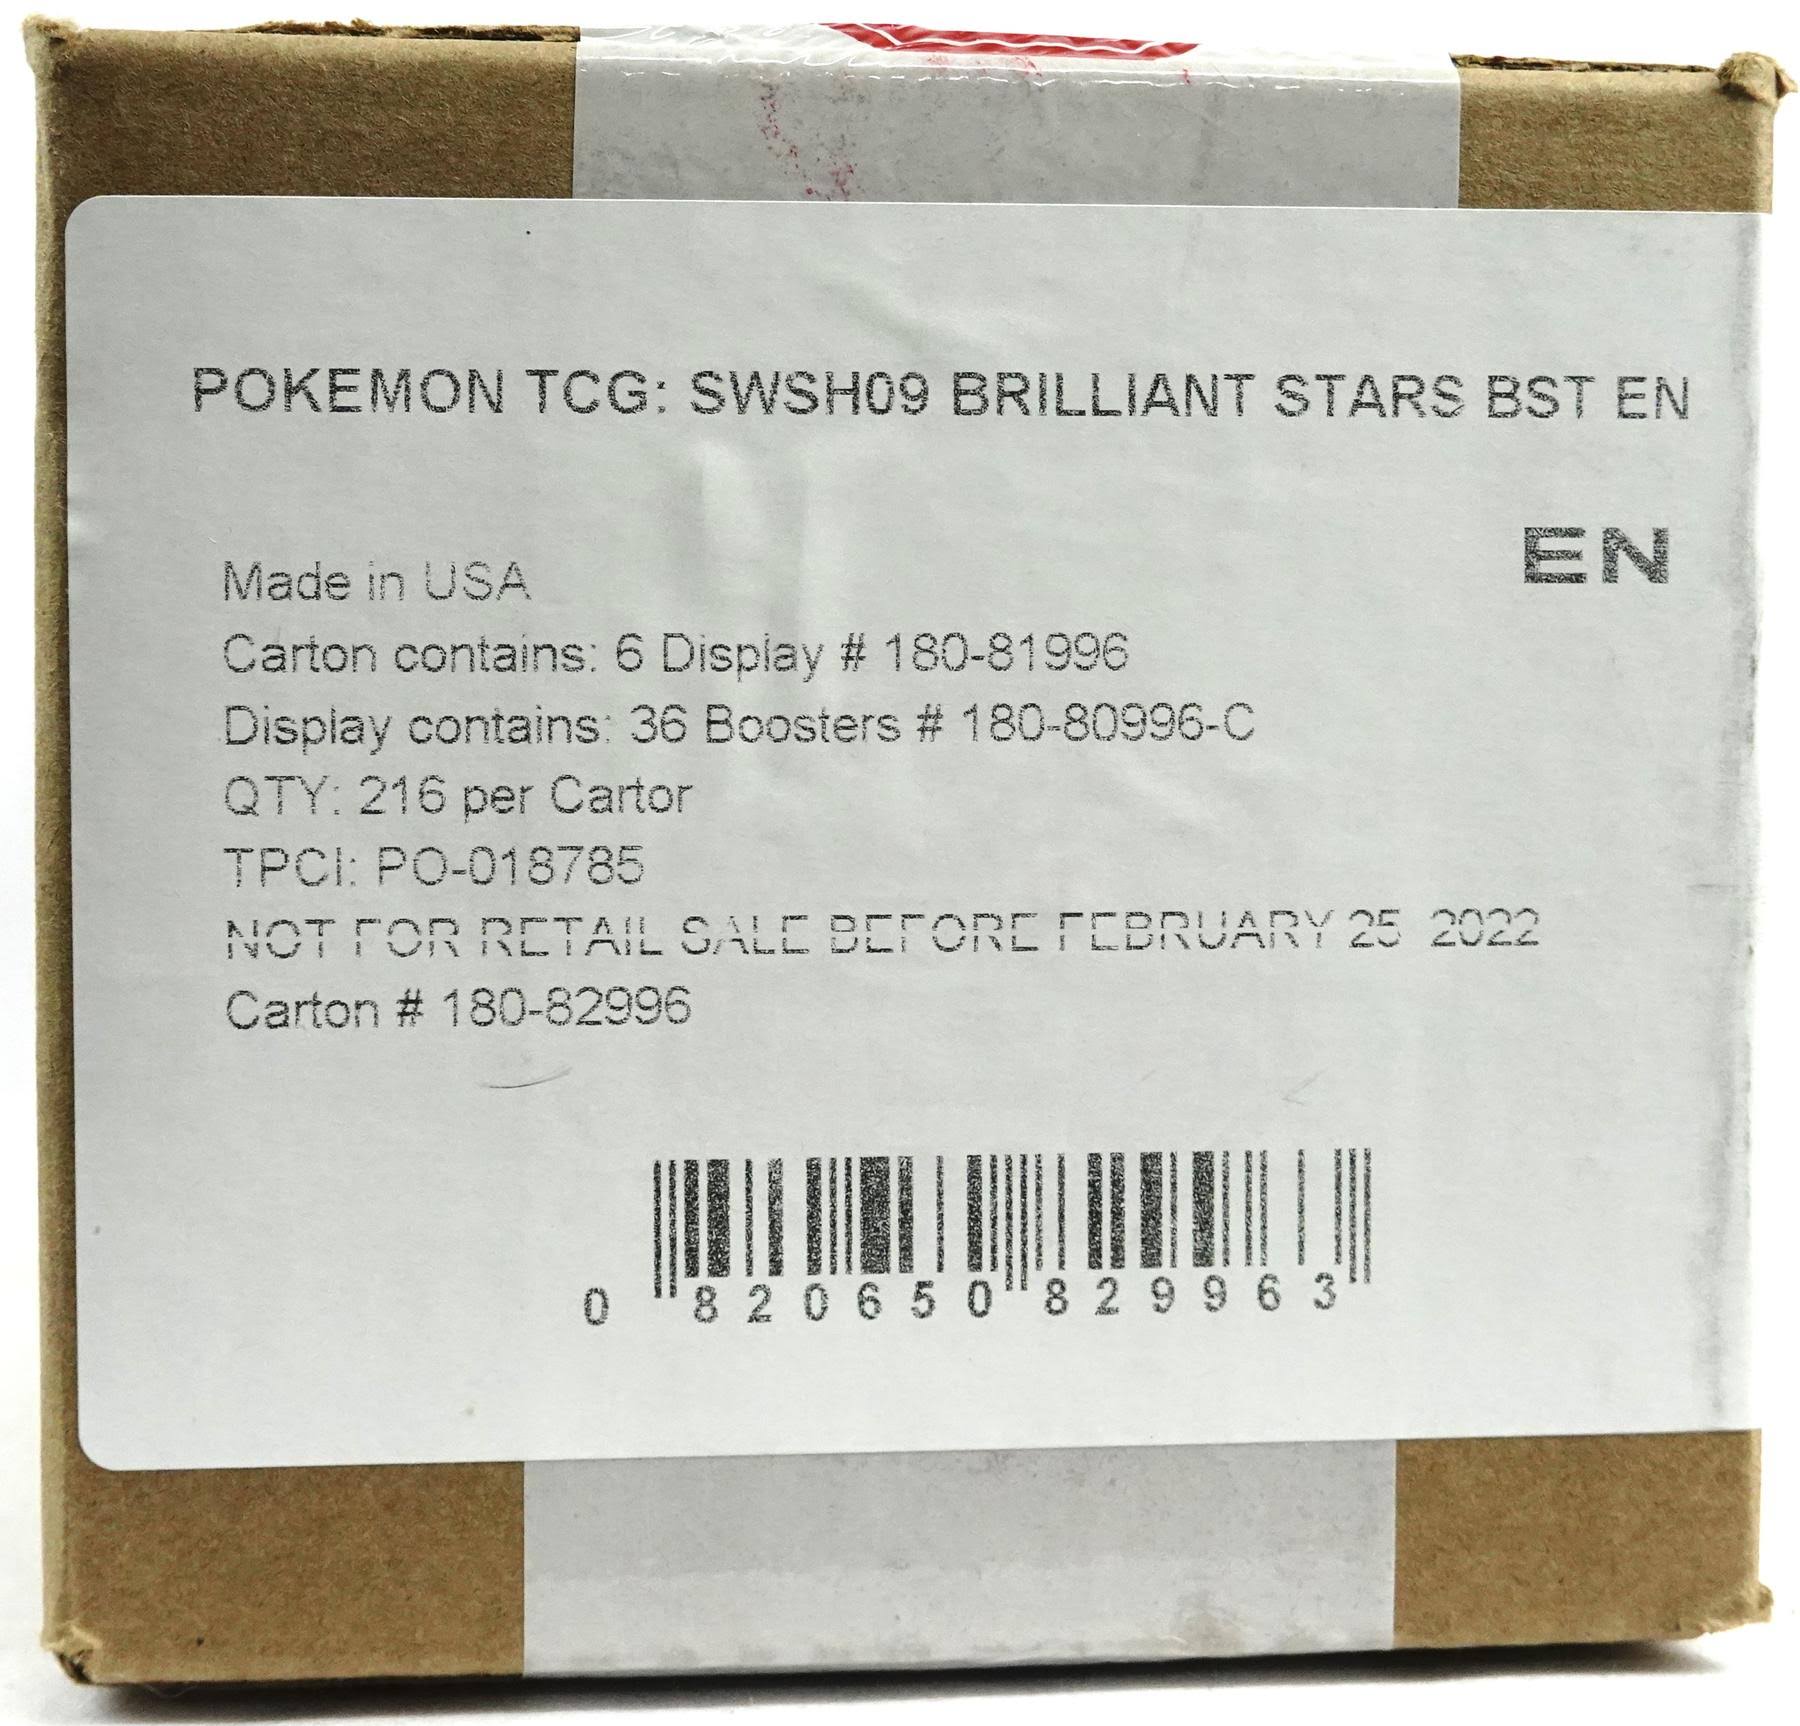 Pokémon Pkmn SS9 Brilliant Stars Booster